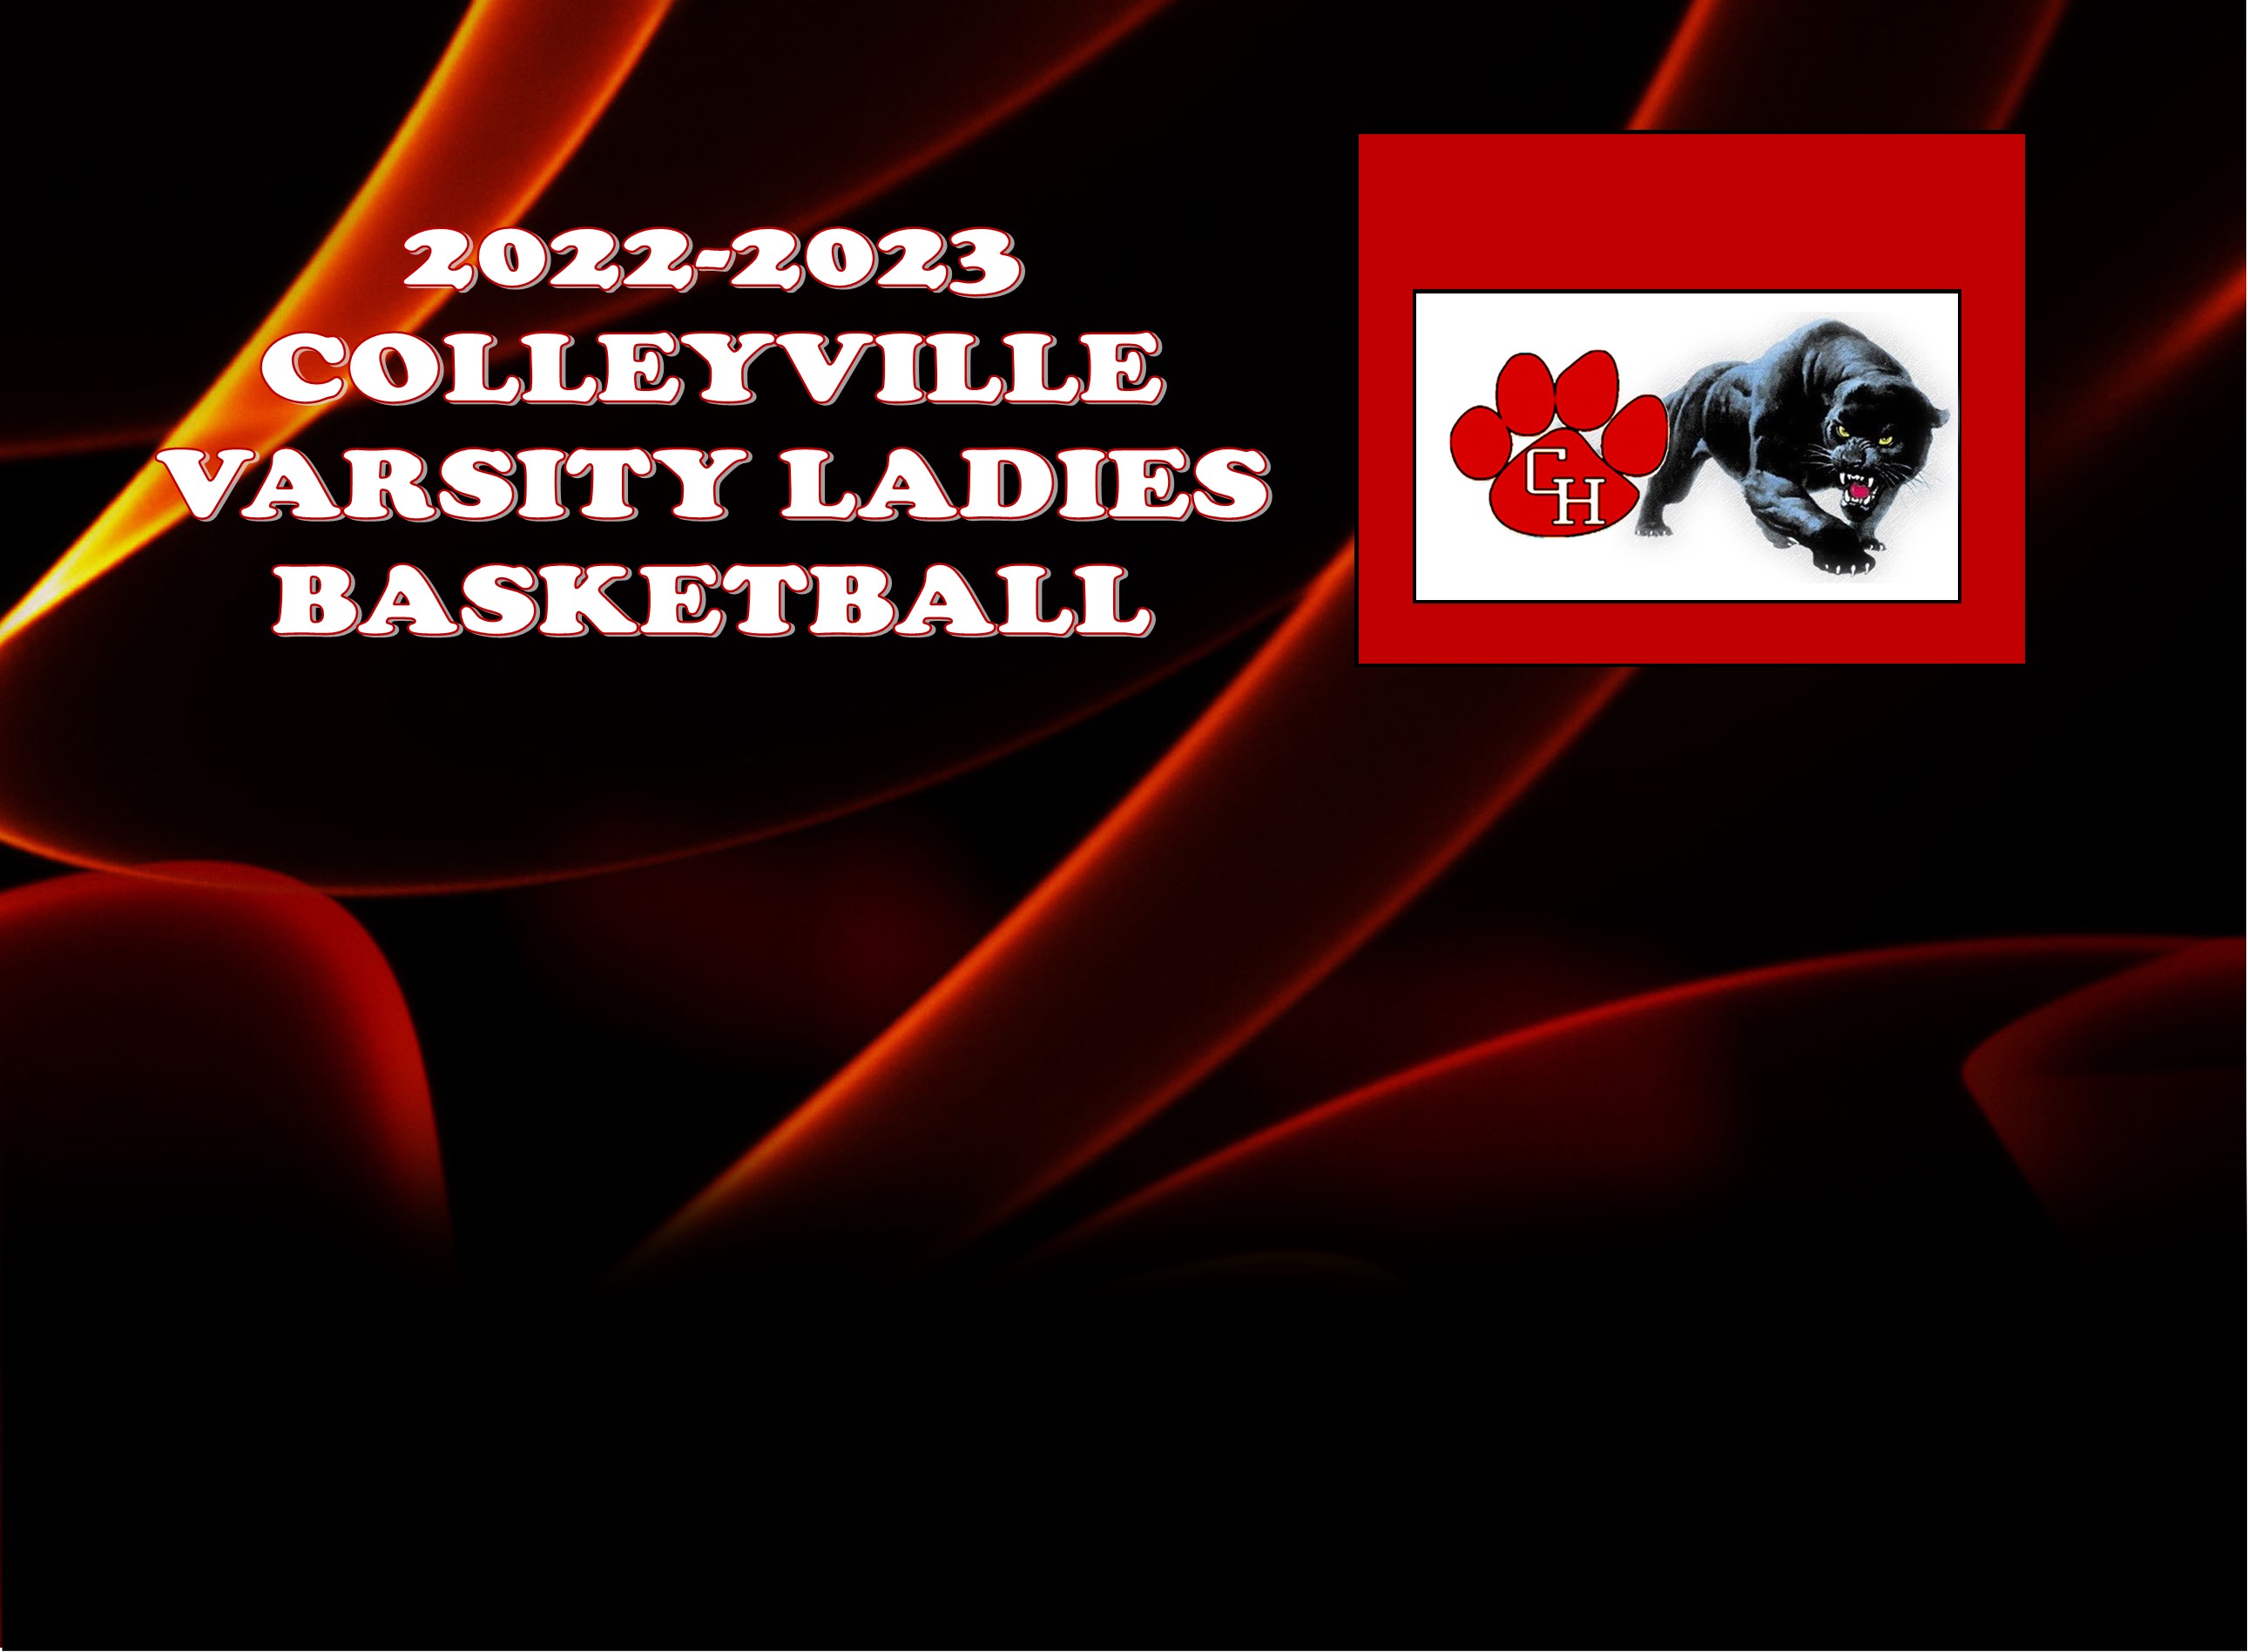 GCISD Varsity Basketball: Colleyville Lady Panthers Defeat Denton Ryan Lady Raiders in Overtime 53-52